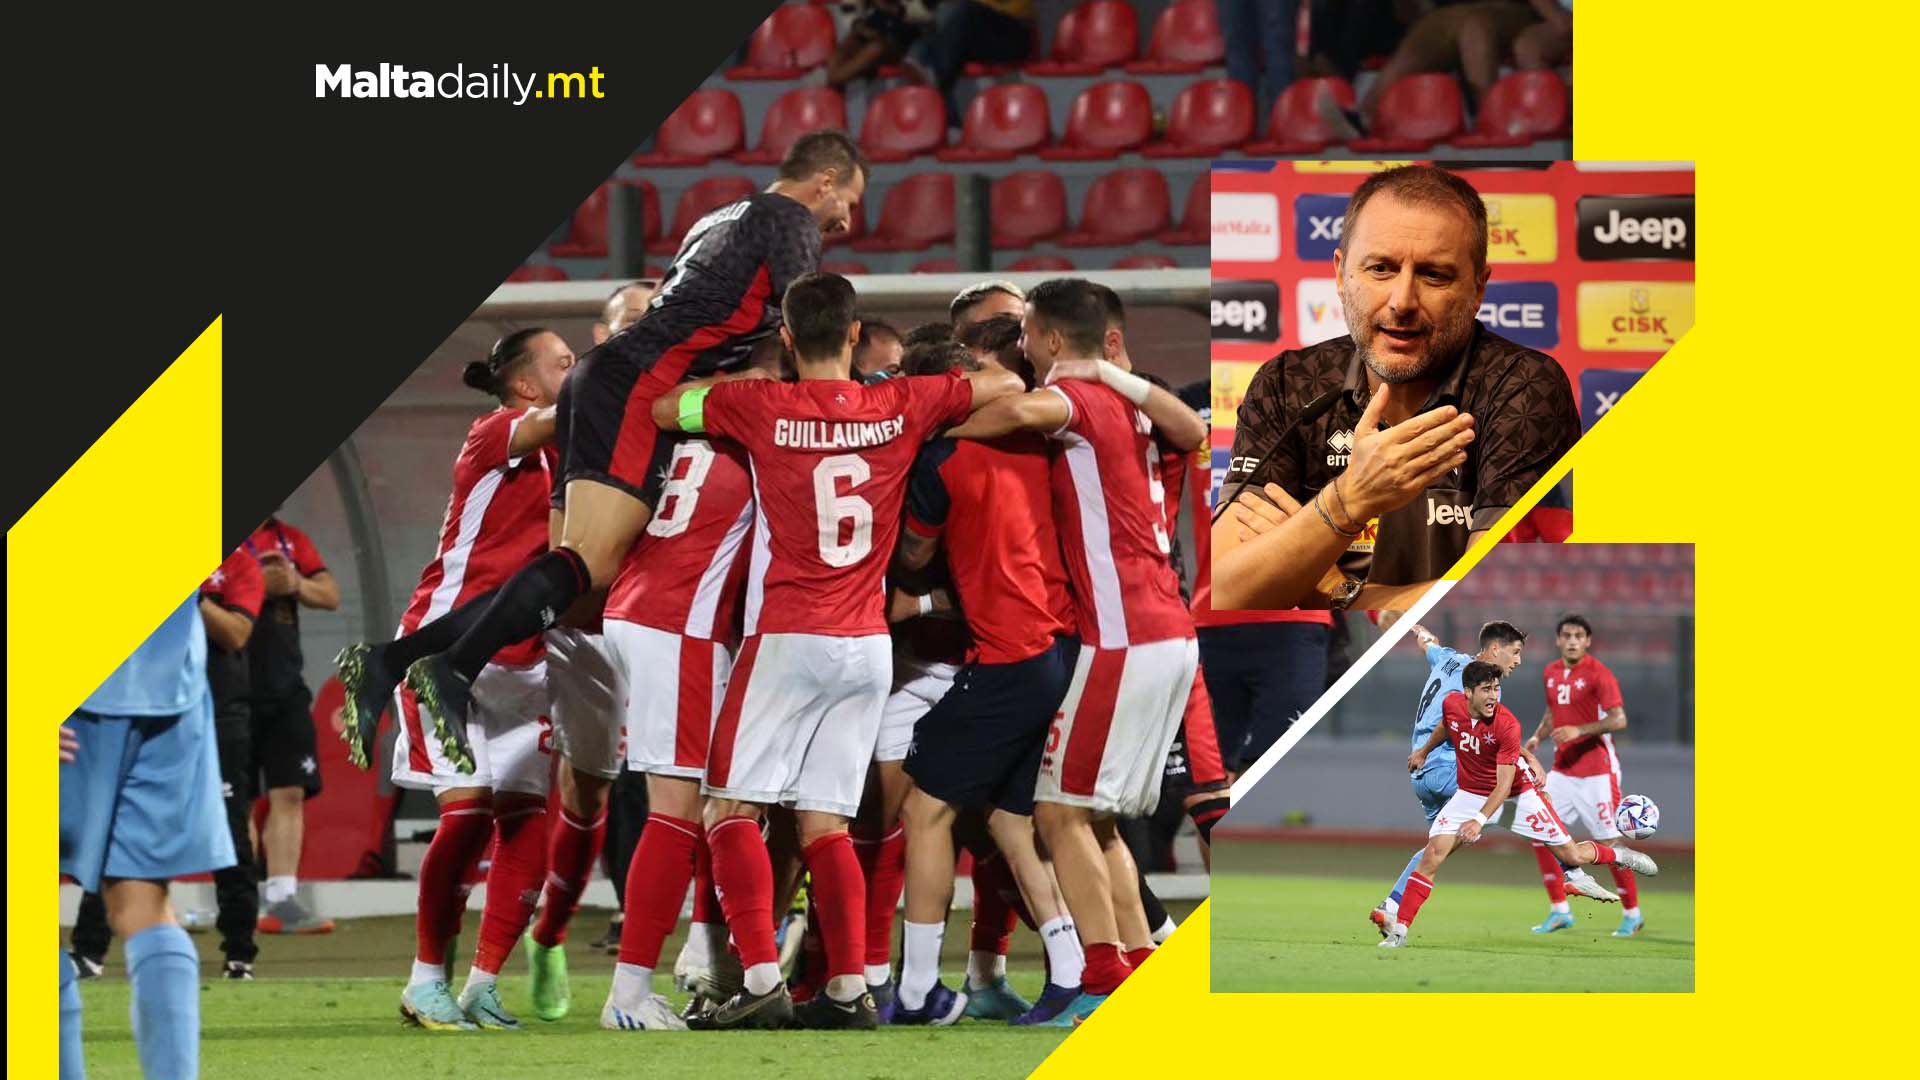 Maltese football team dedicate win to coach Devis Mangia despite allegations